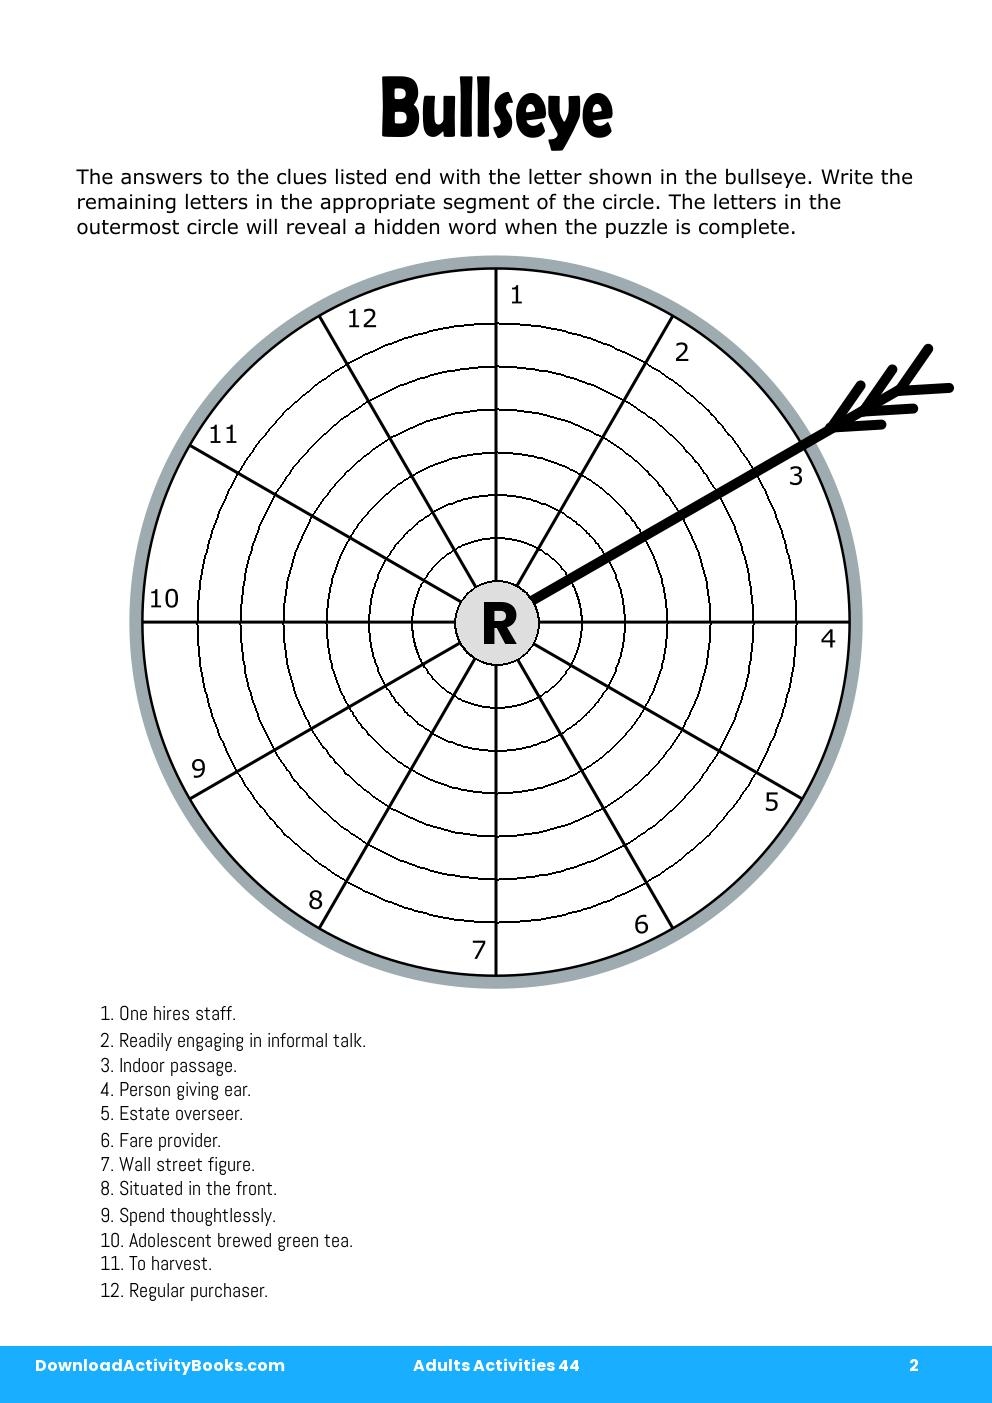 Bullseye in Adults Activities 44